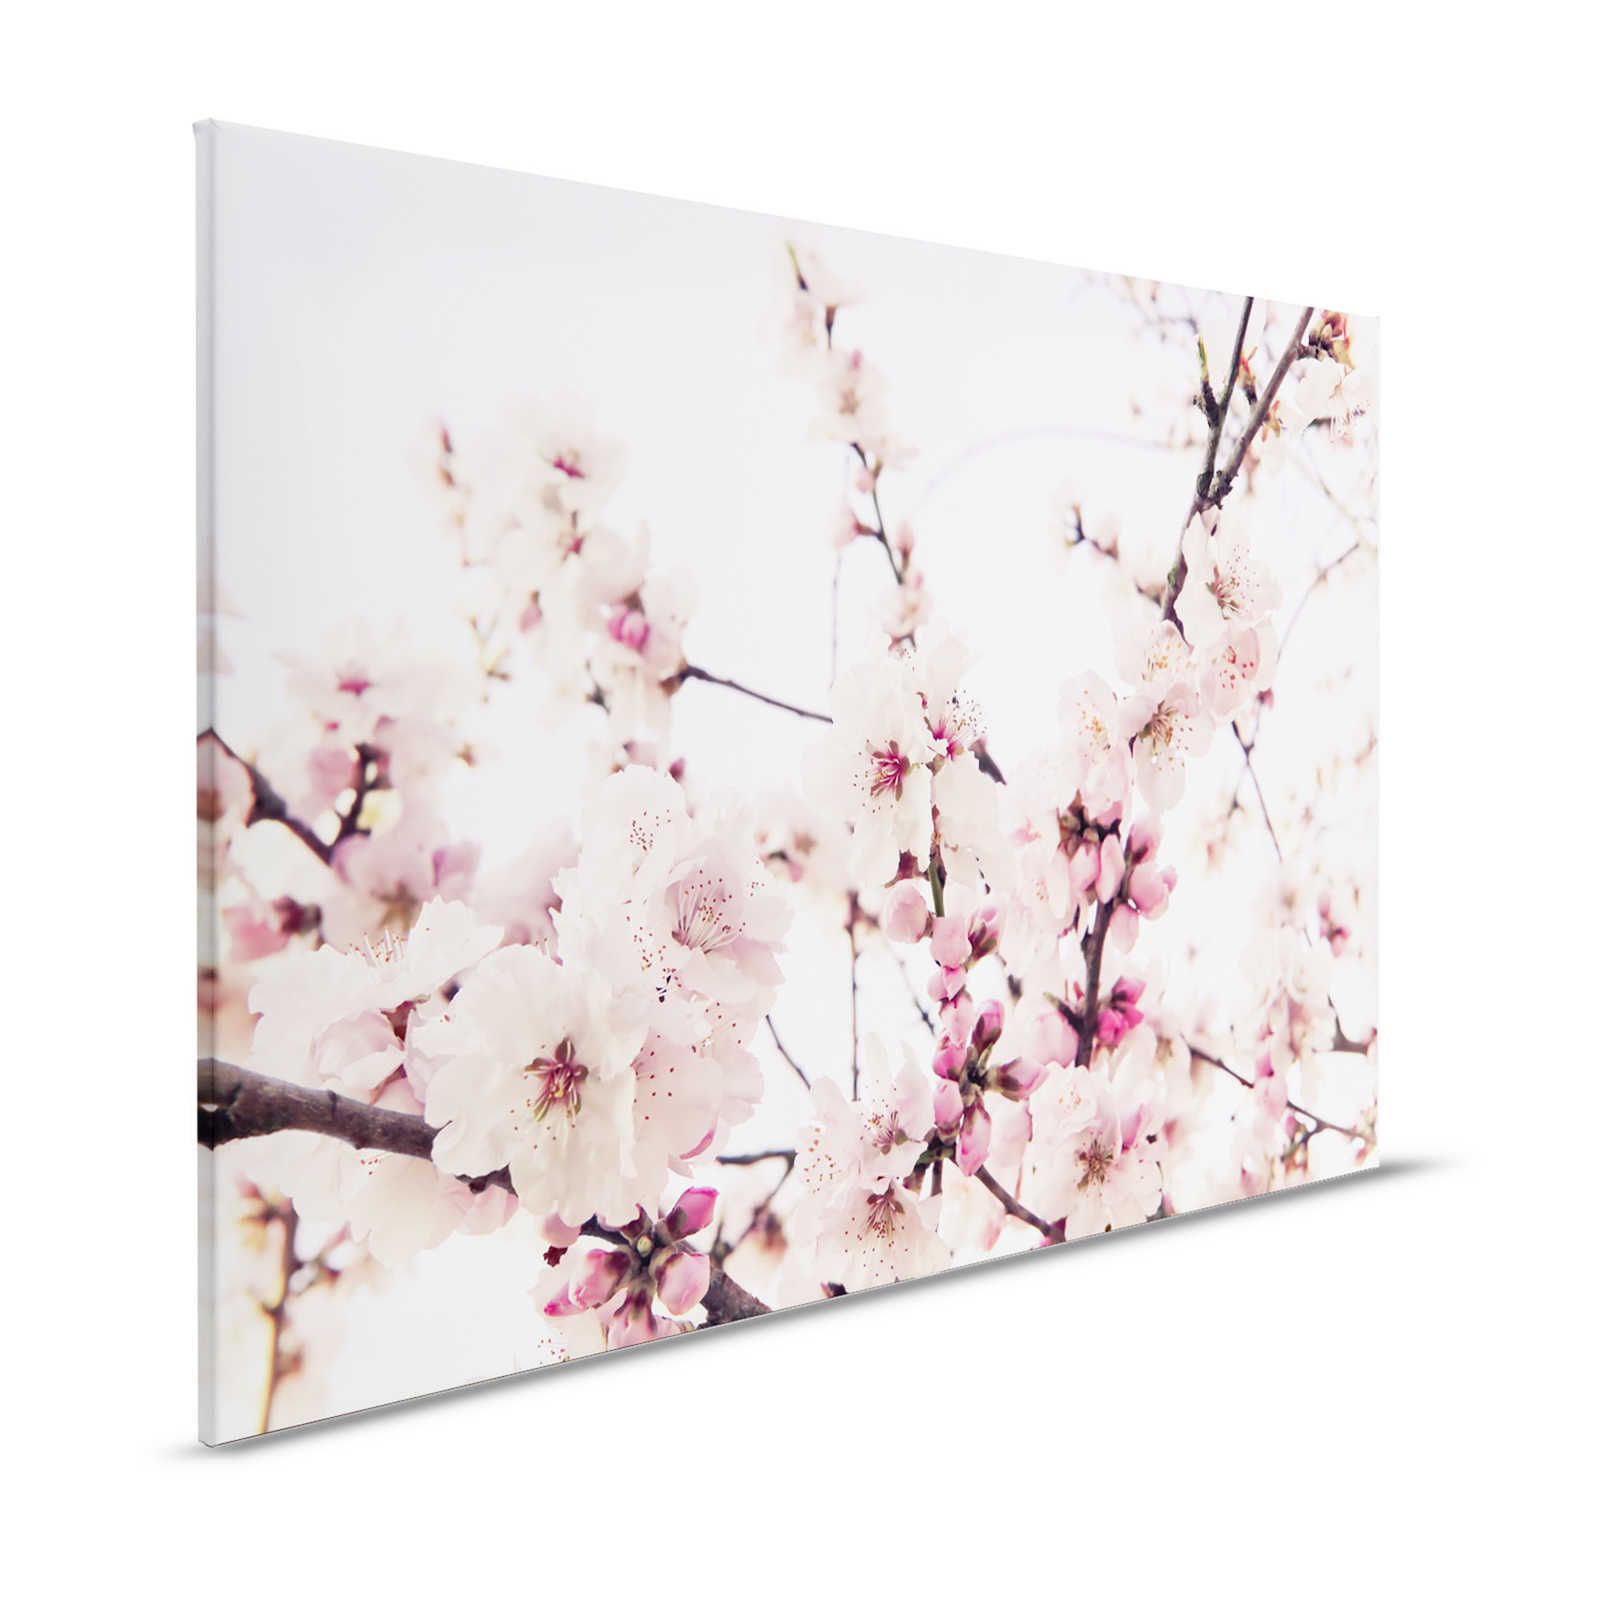 Natur Leinwandbild mit Kirschblüten – 1,20 m x 0,80 m
